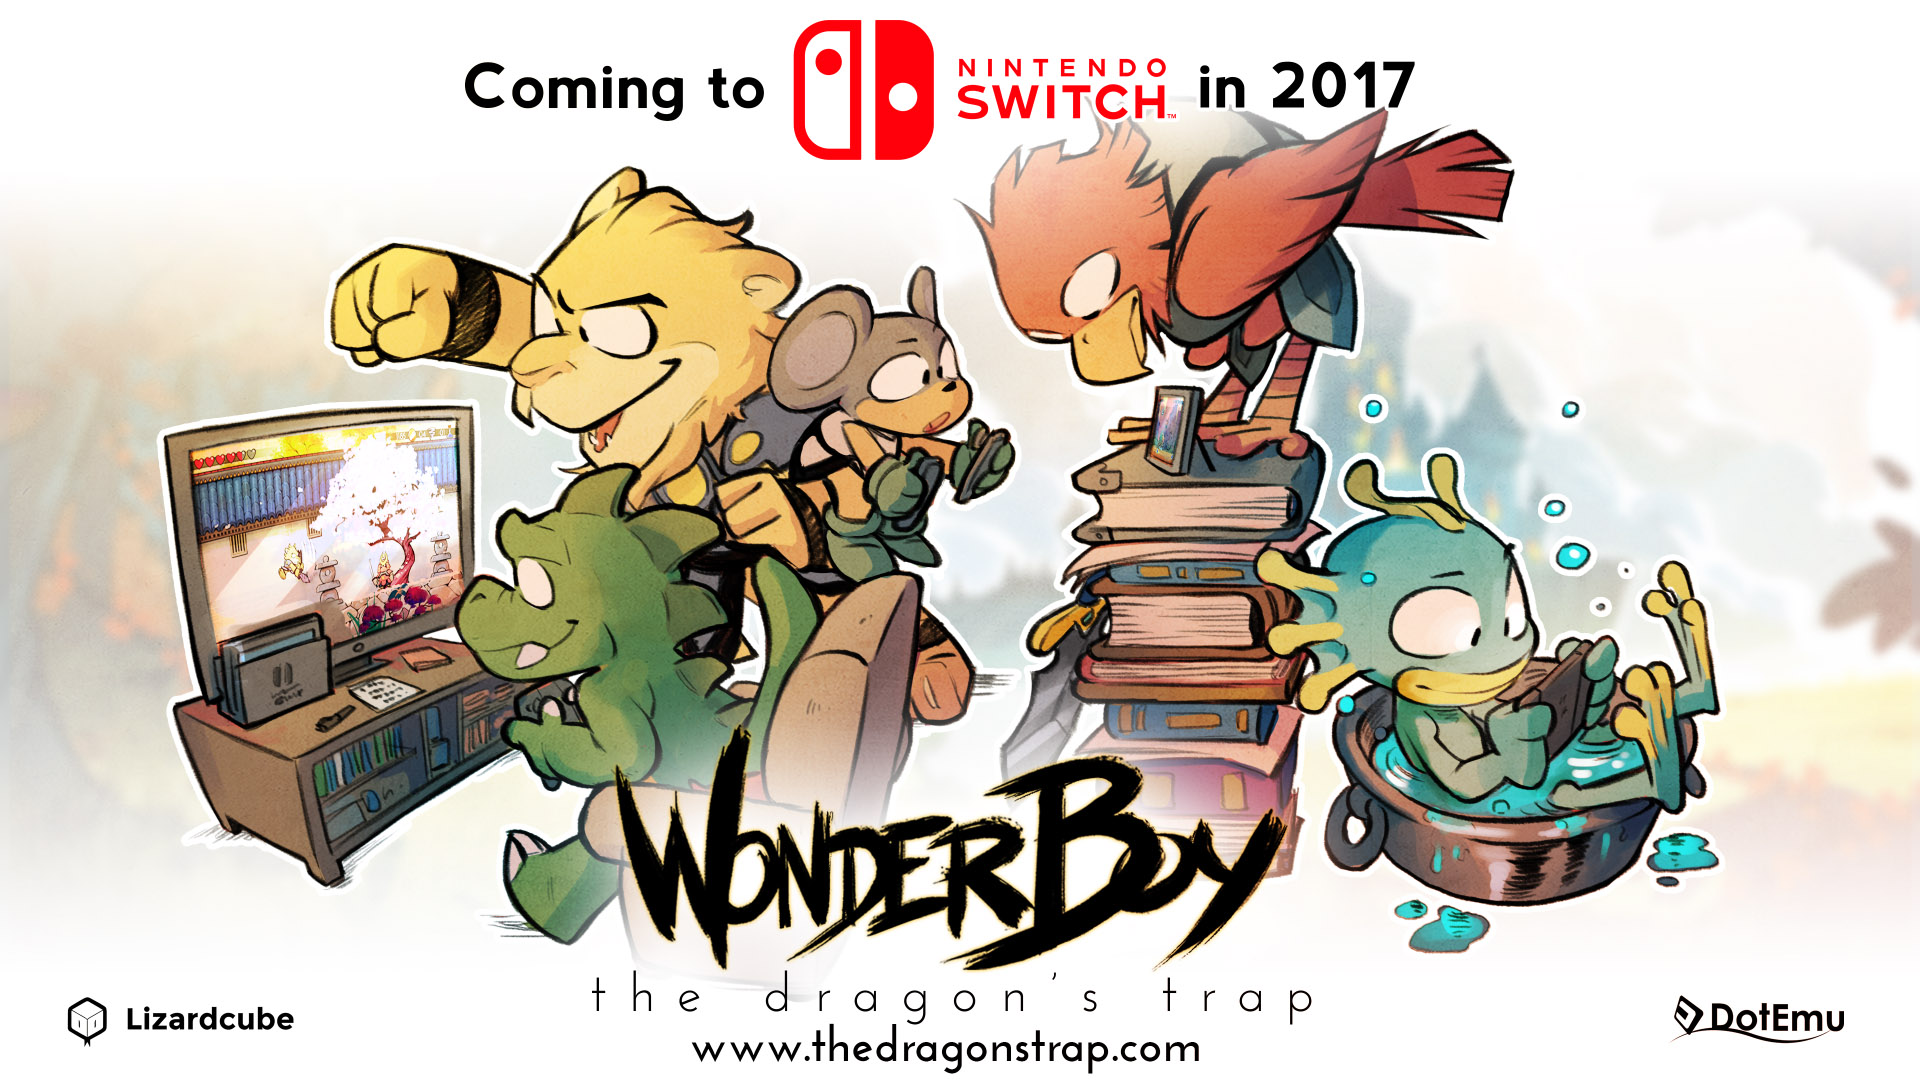 WonderBoyTheDragonsTrap-NintendoSwitch.jpg